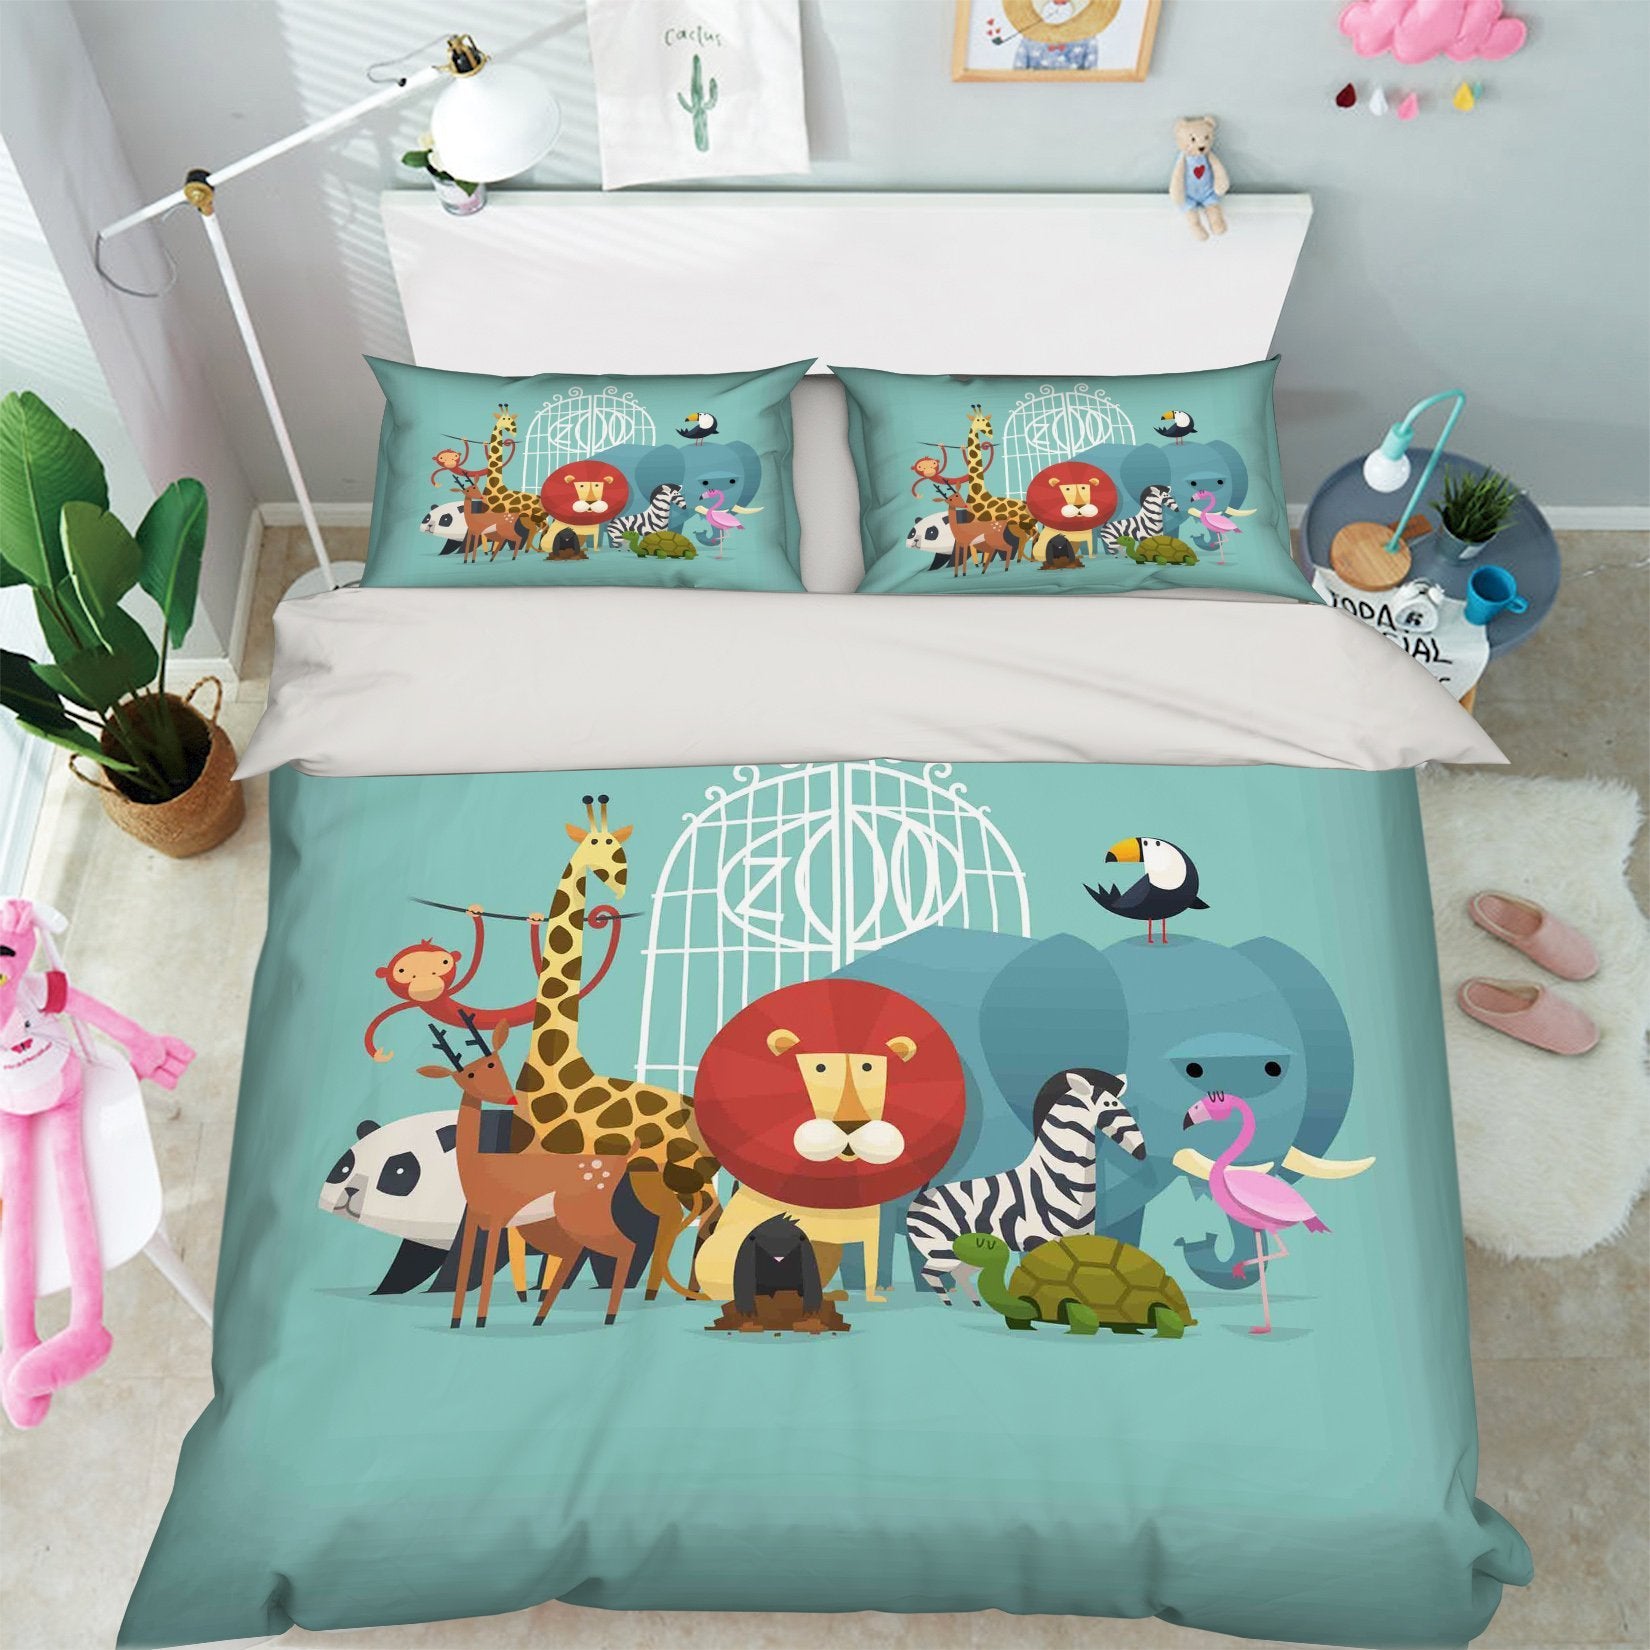 3D Sitting Animal 157 Bed Pillowcases Quilt Wallpaper AJ Wallpaper 